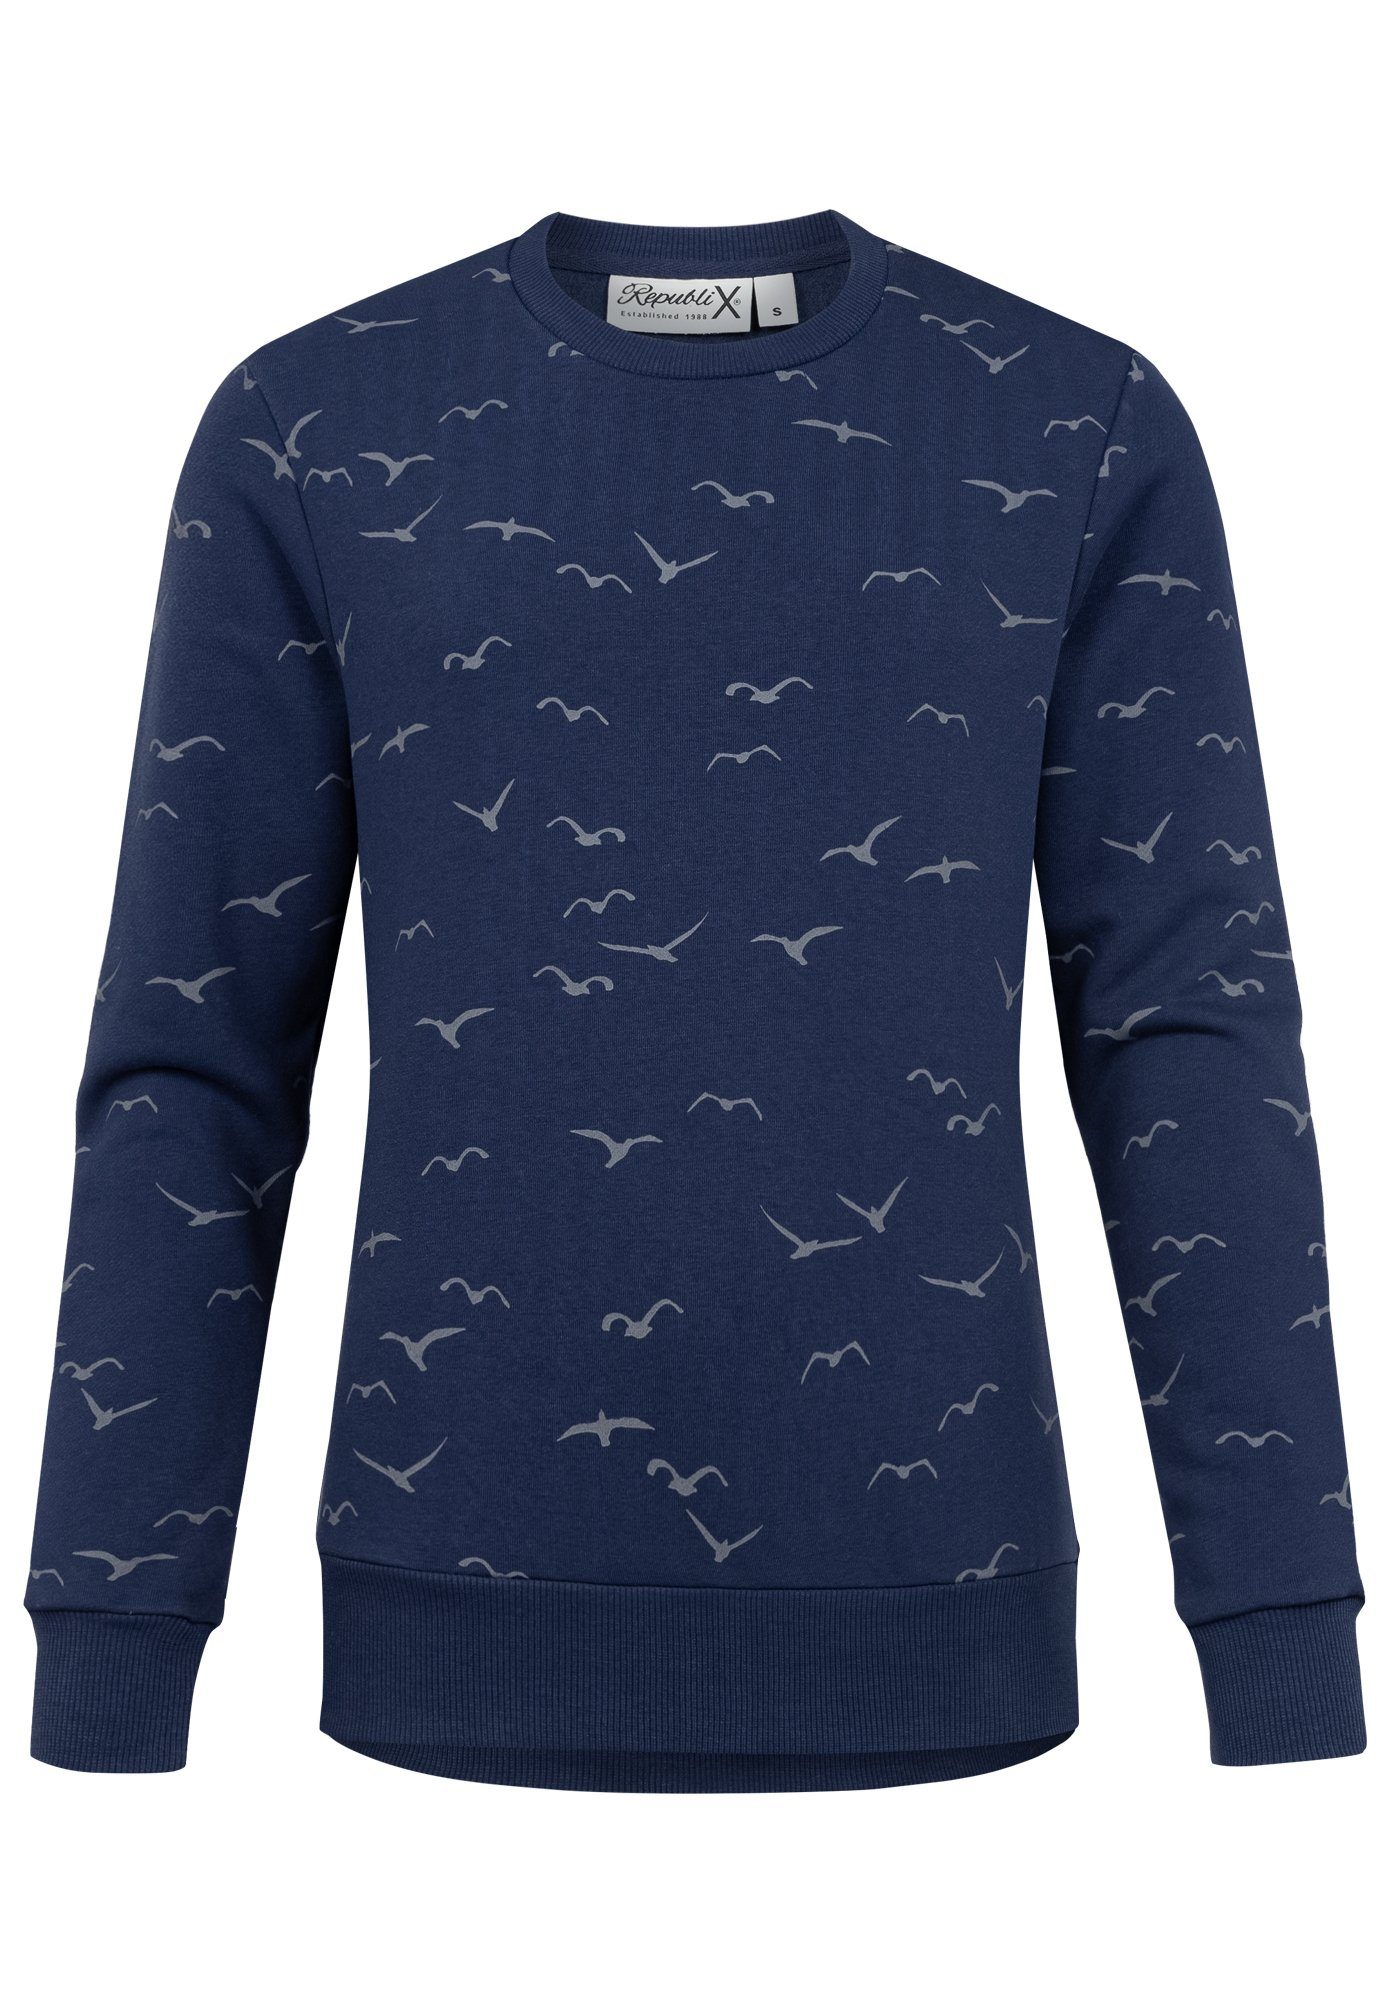 REPUBLIX Sweatshirt ANA Damen Print Kapuzenpullover Sweatjacke Pullover Hoodie Navyblau